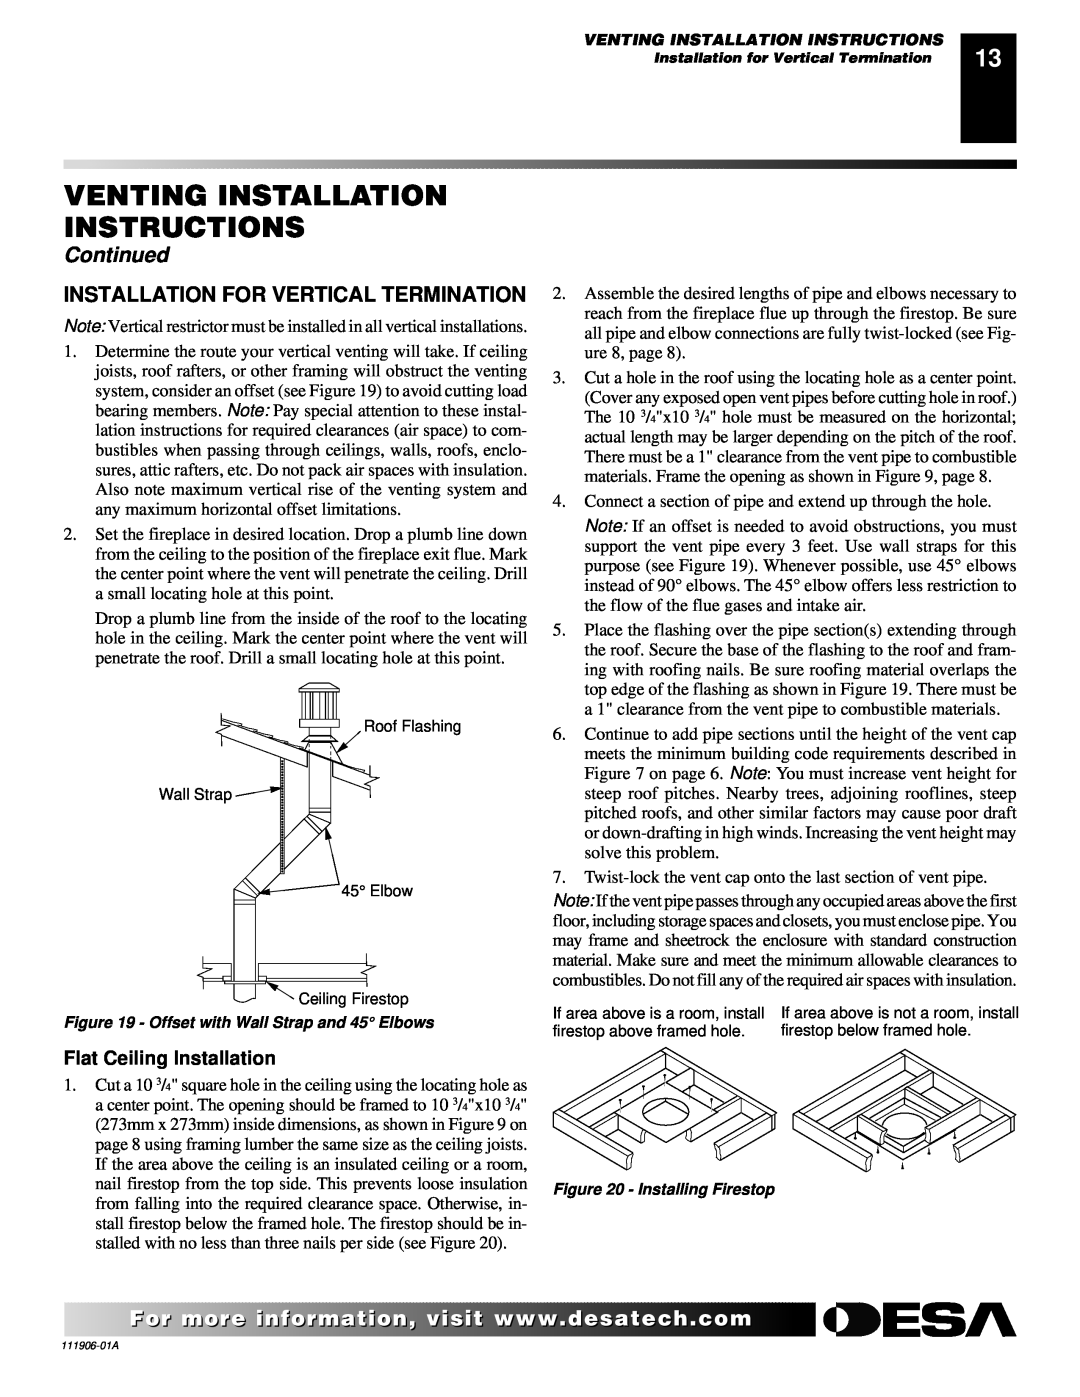 Desa (V)V42NA(1) installation manual Venting Installation Instructions, Continued, Installation For Vertical Termination 